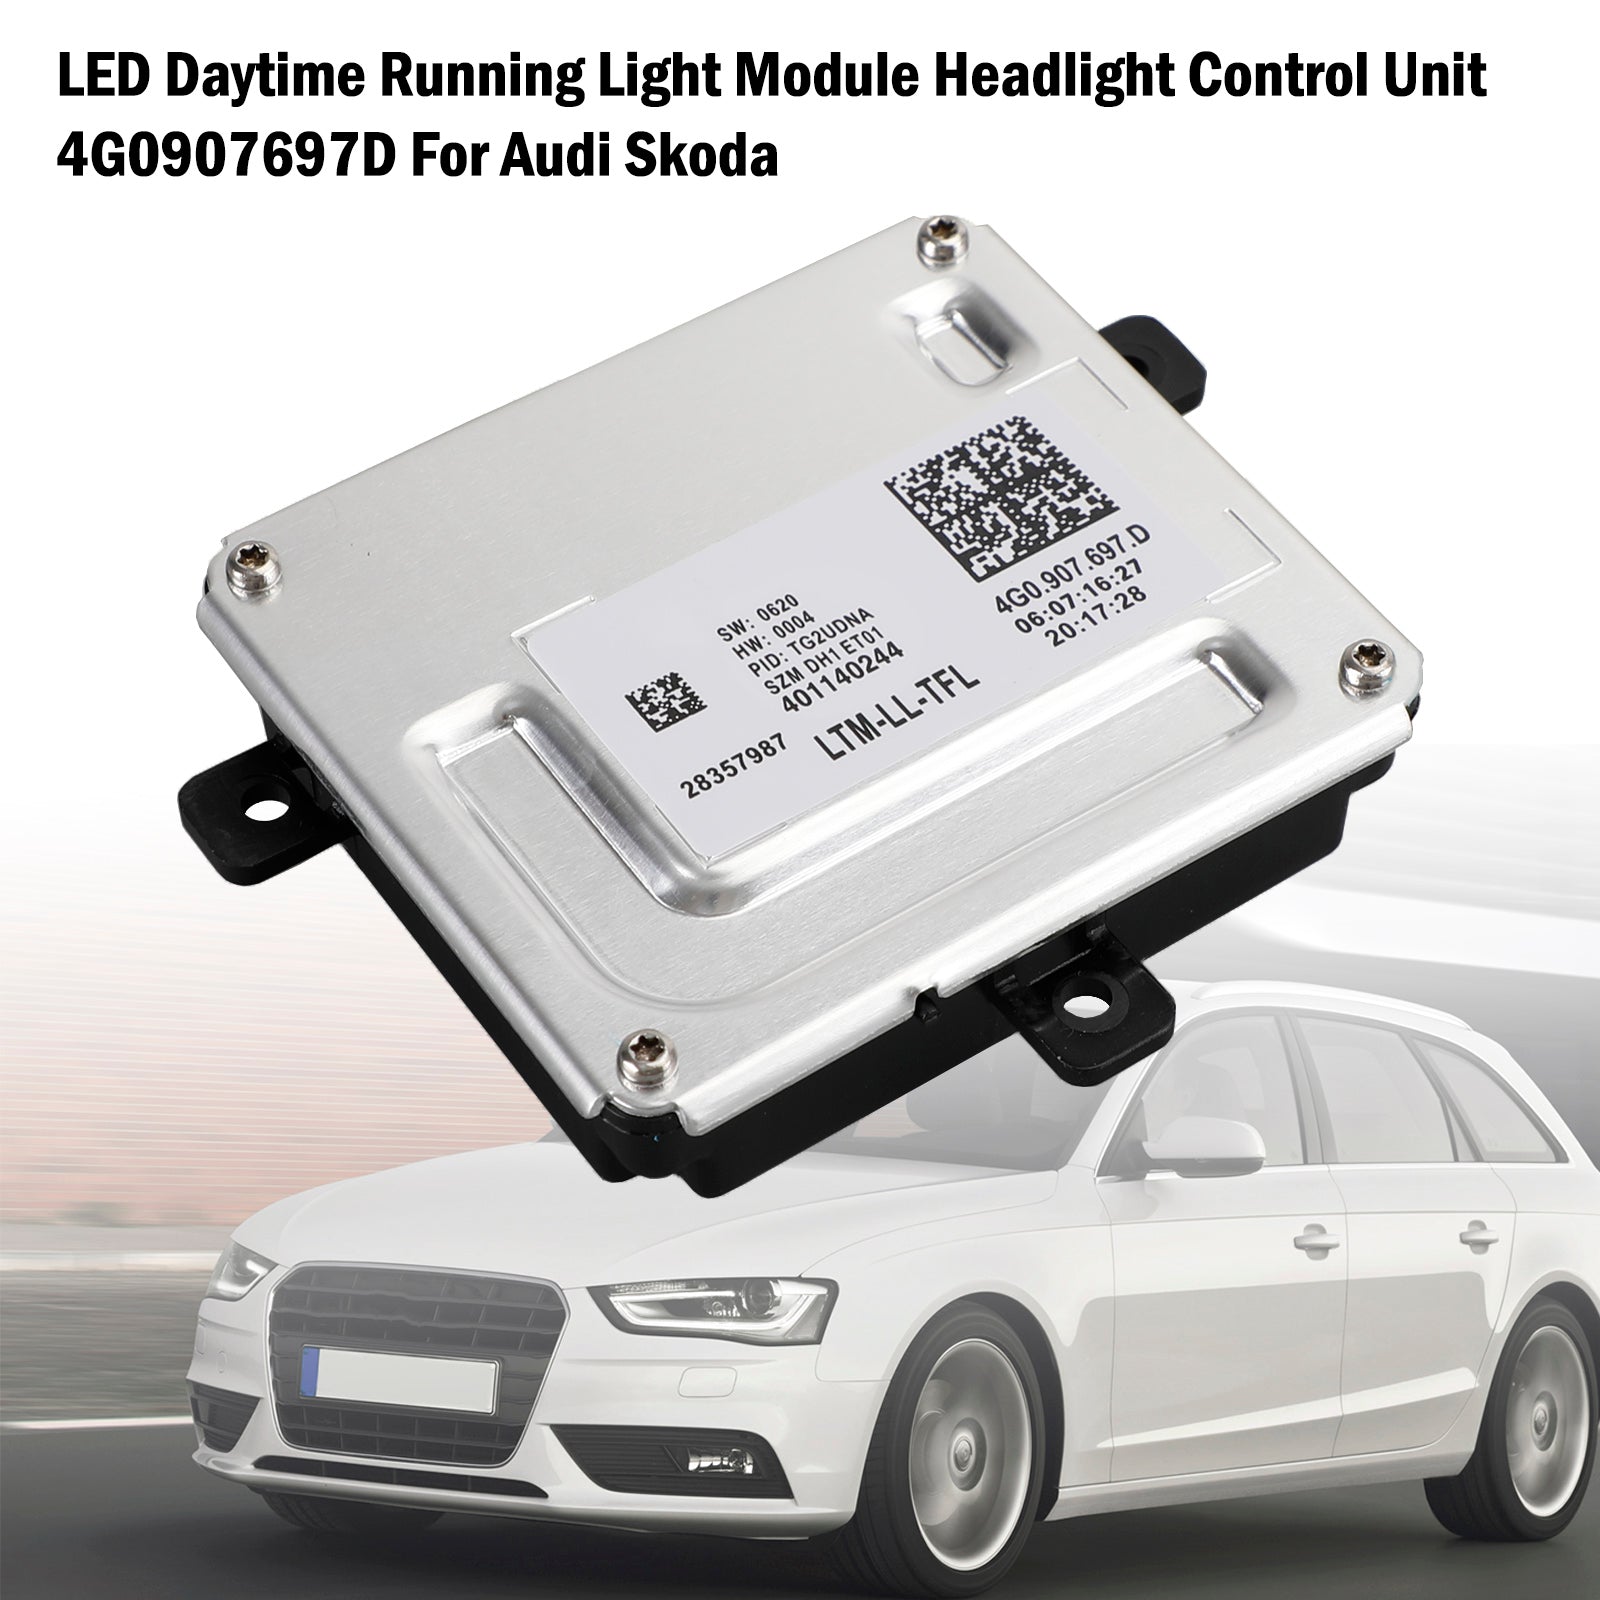 4G0907697D 2012-2014 AUDI A6 / S6 / RS6 LED Daytime Running Light Module Headlight Control Unit